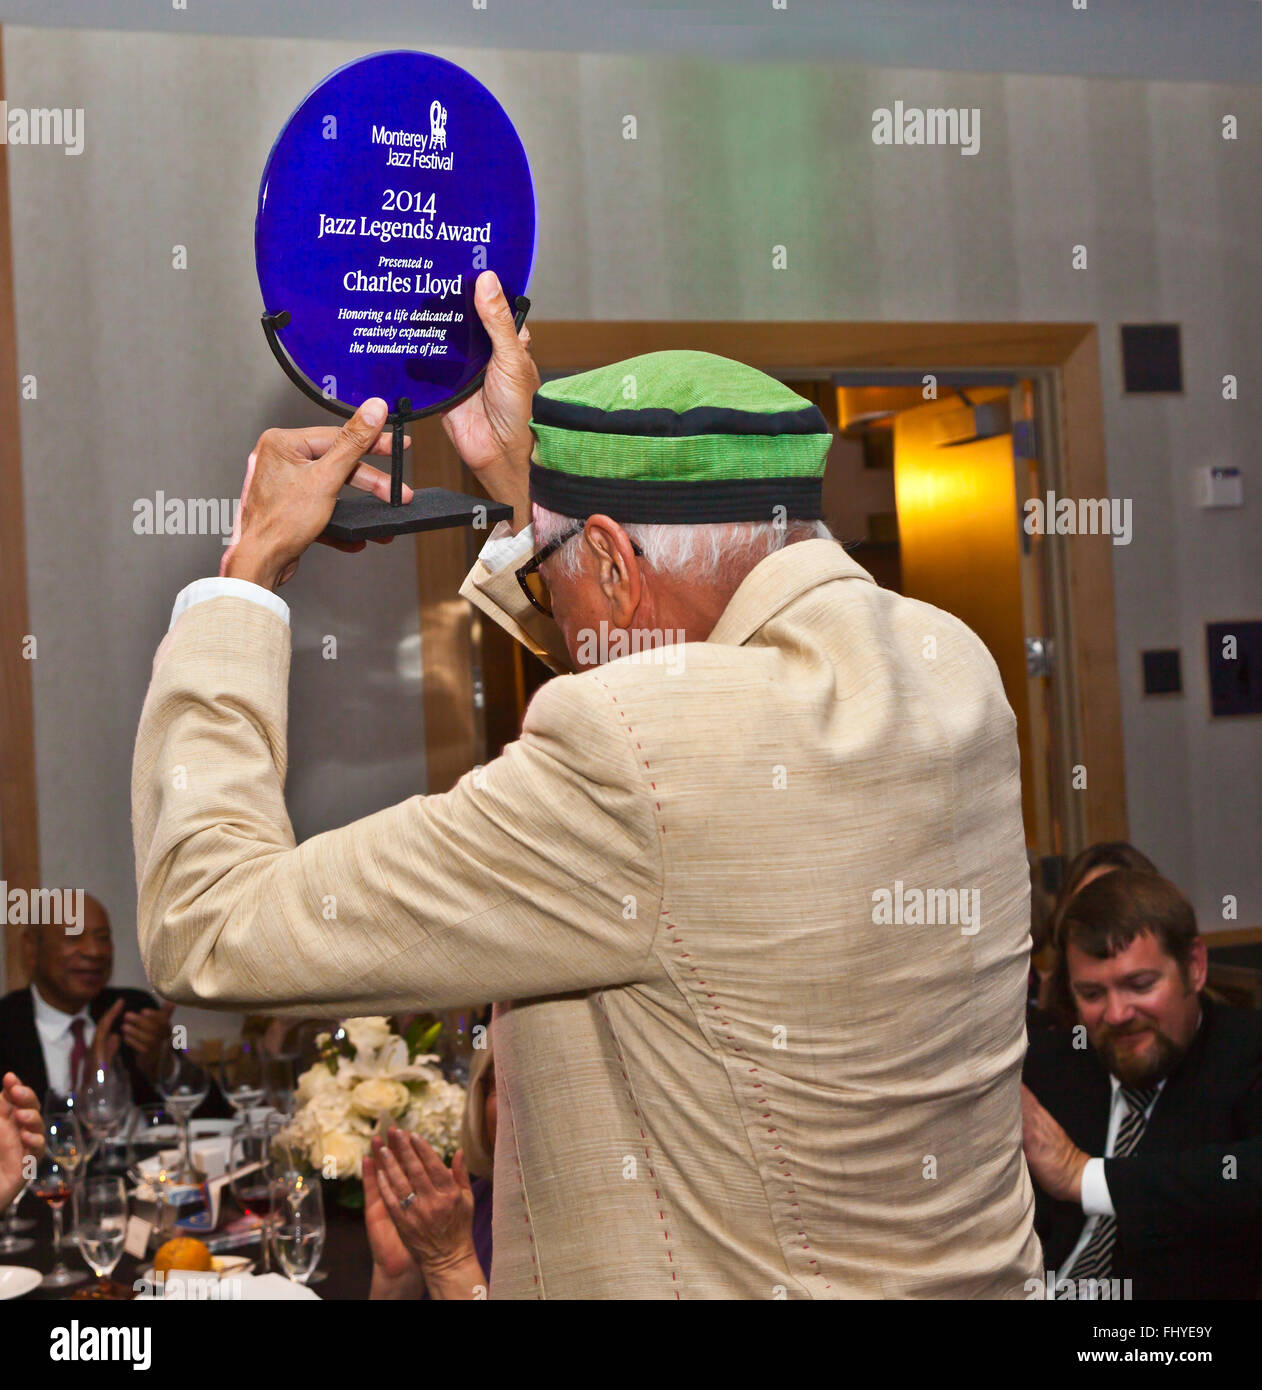 CHARLES LLOYD riceve il 2014 JAZAZ LEGENDS AWARD al 57 ANNUALE DI MONTEREY JAZZ FESTIVAL GALA Foto Stock